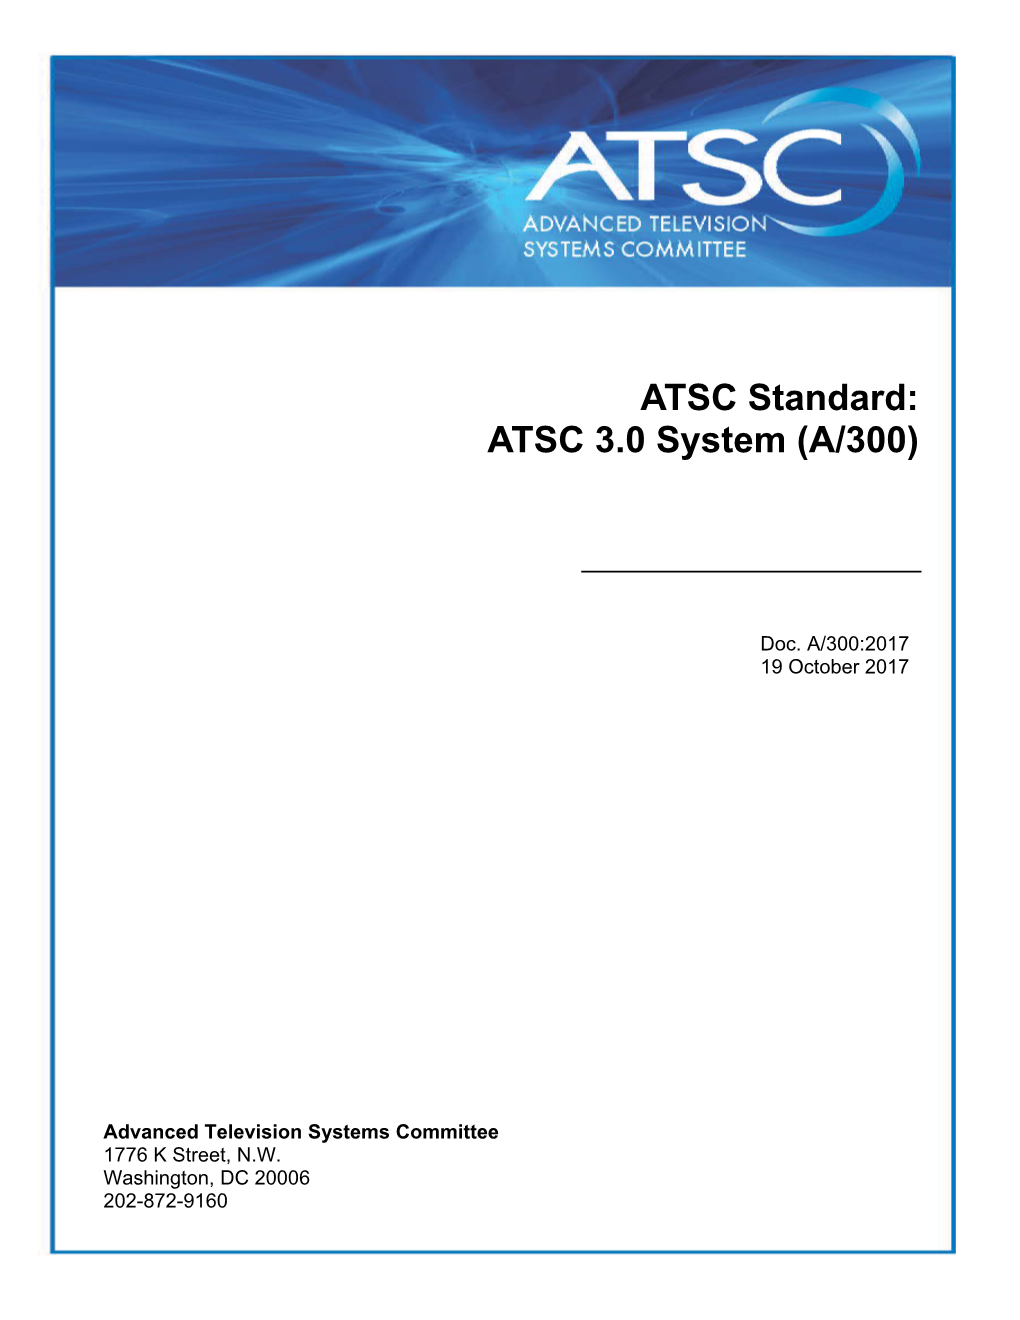 A/300, "ATSC 3.0 System Standard"